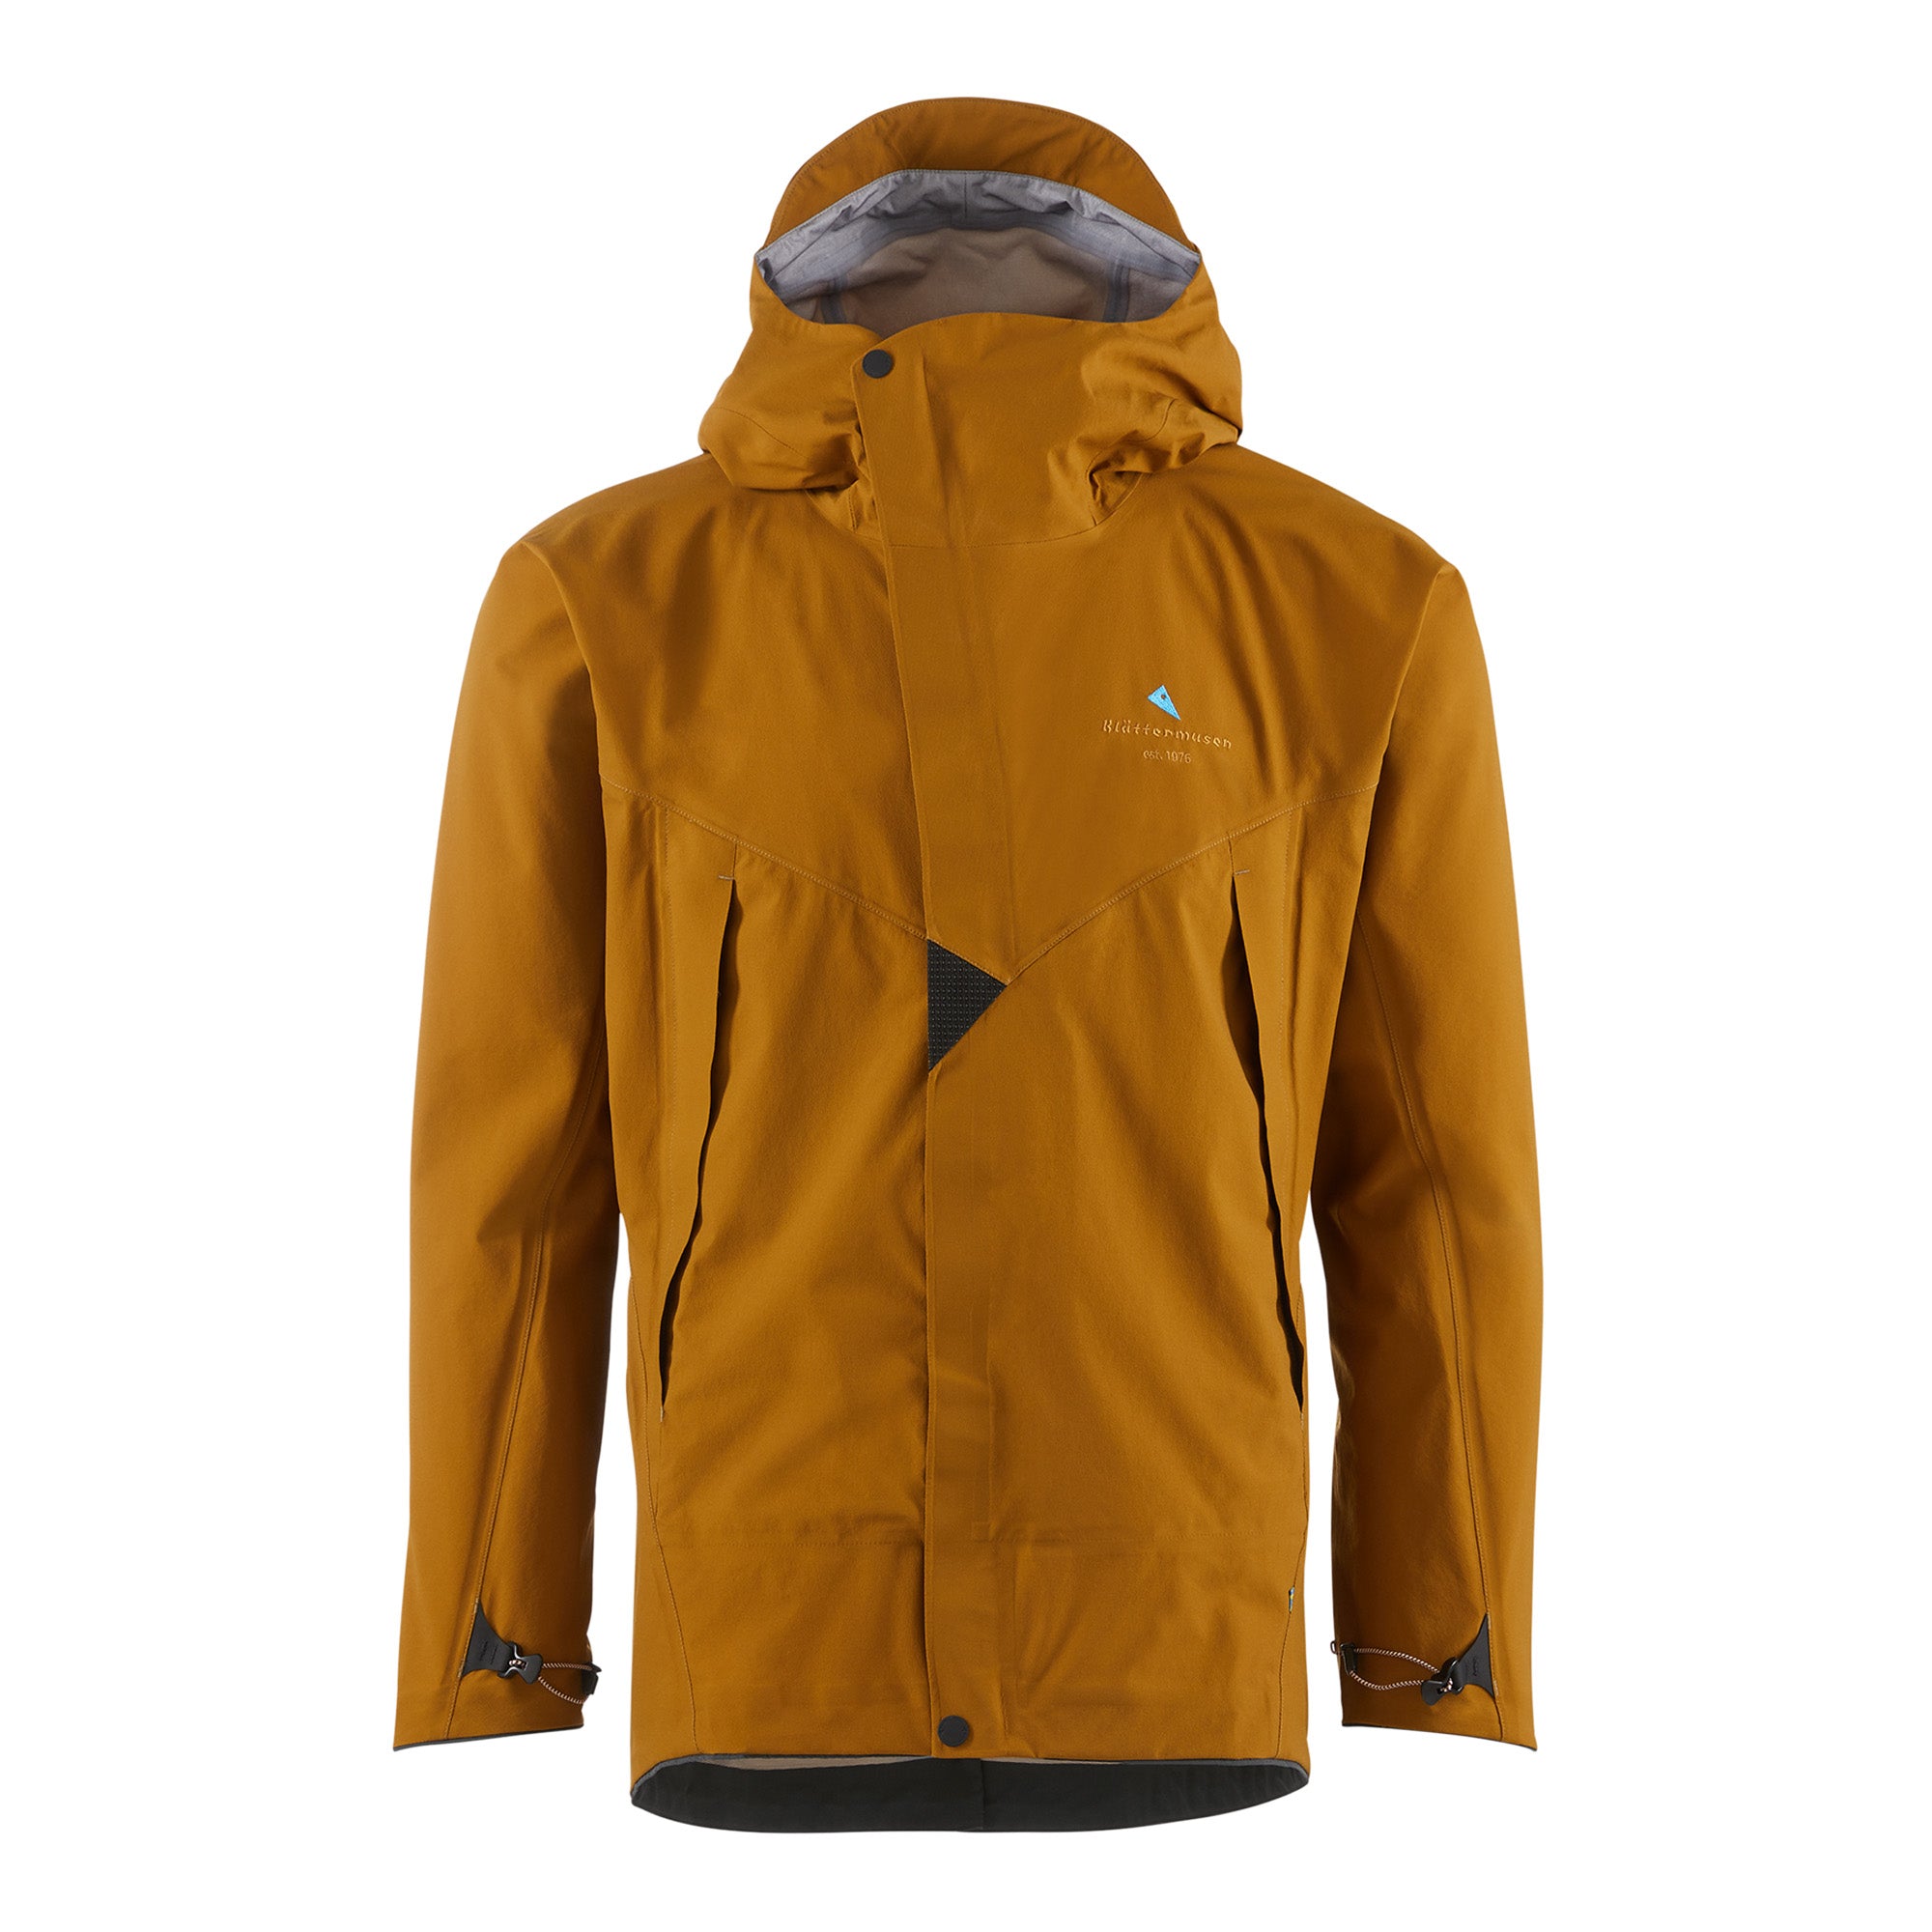 103 Levitend Cutan Rain Jacket - Asynja Jacket Limited Edition